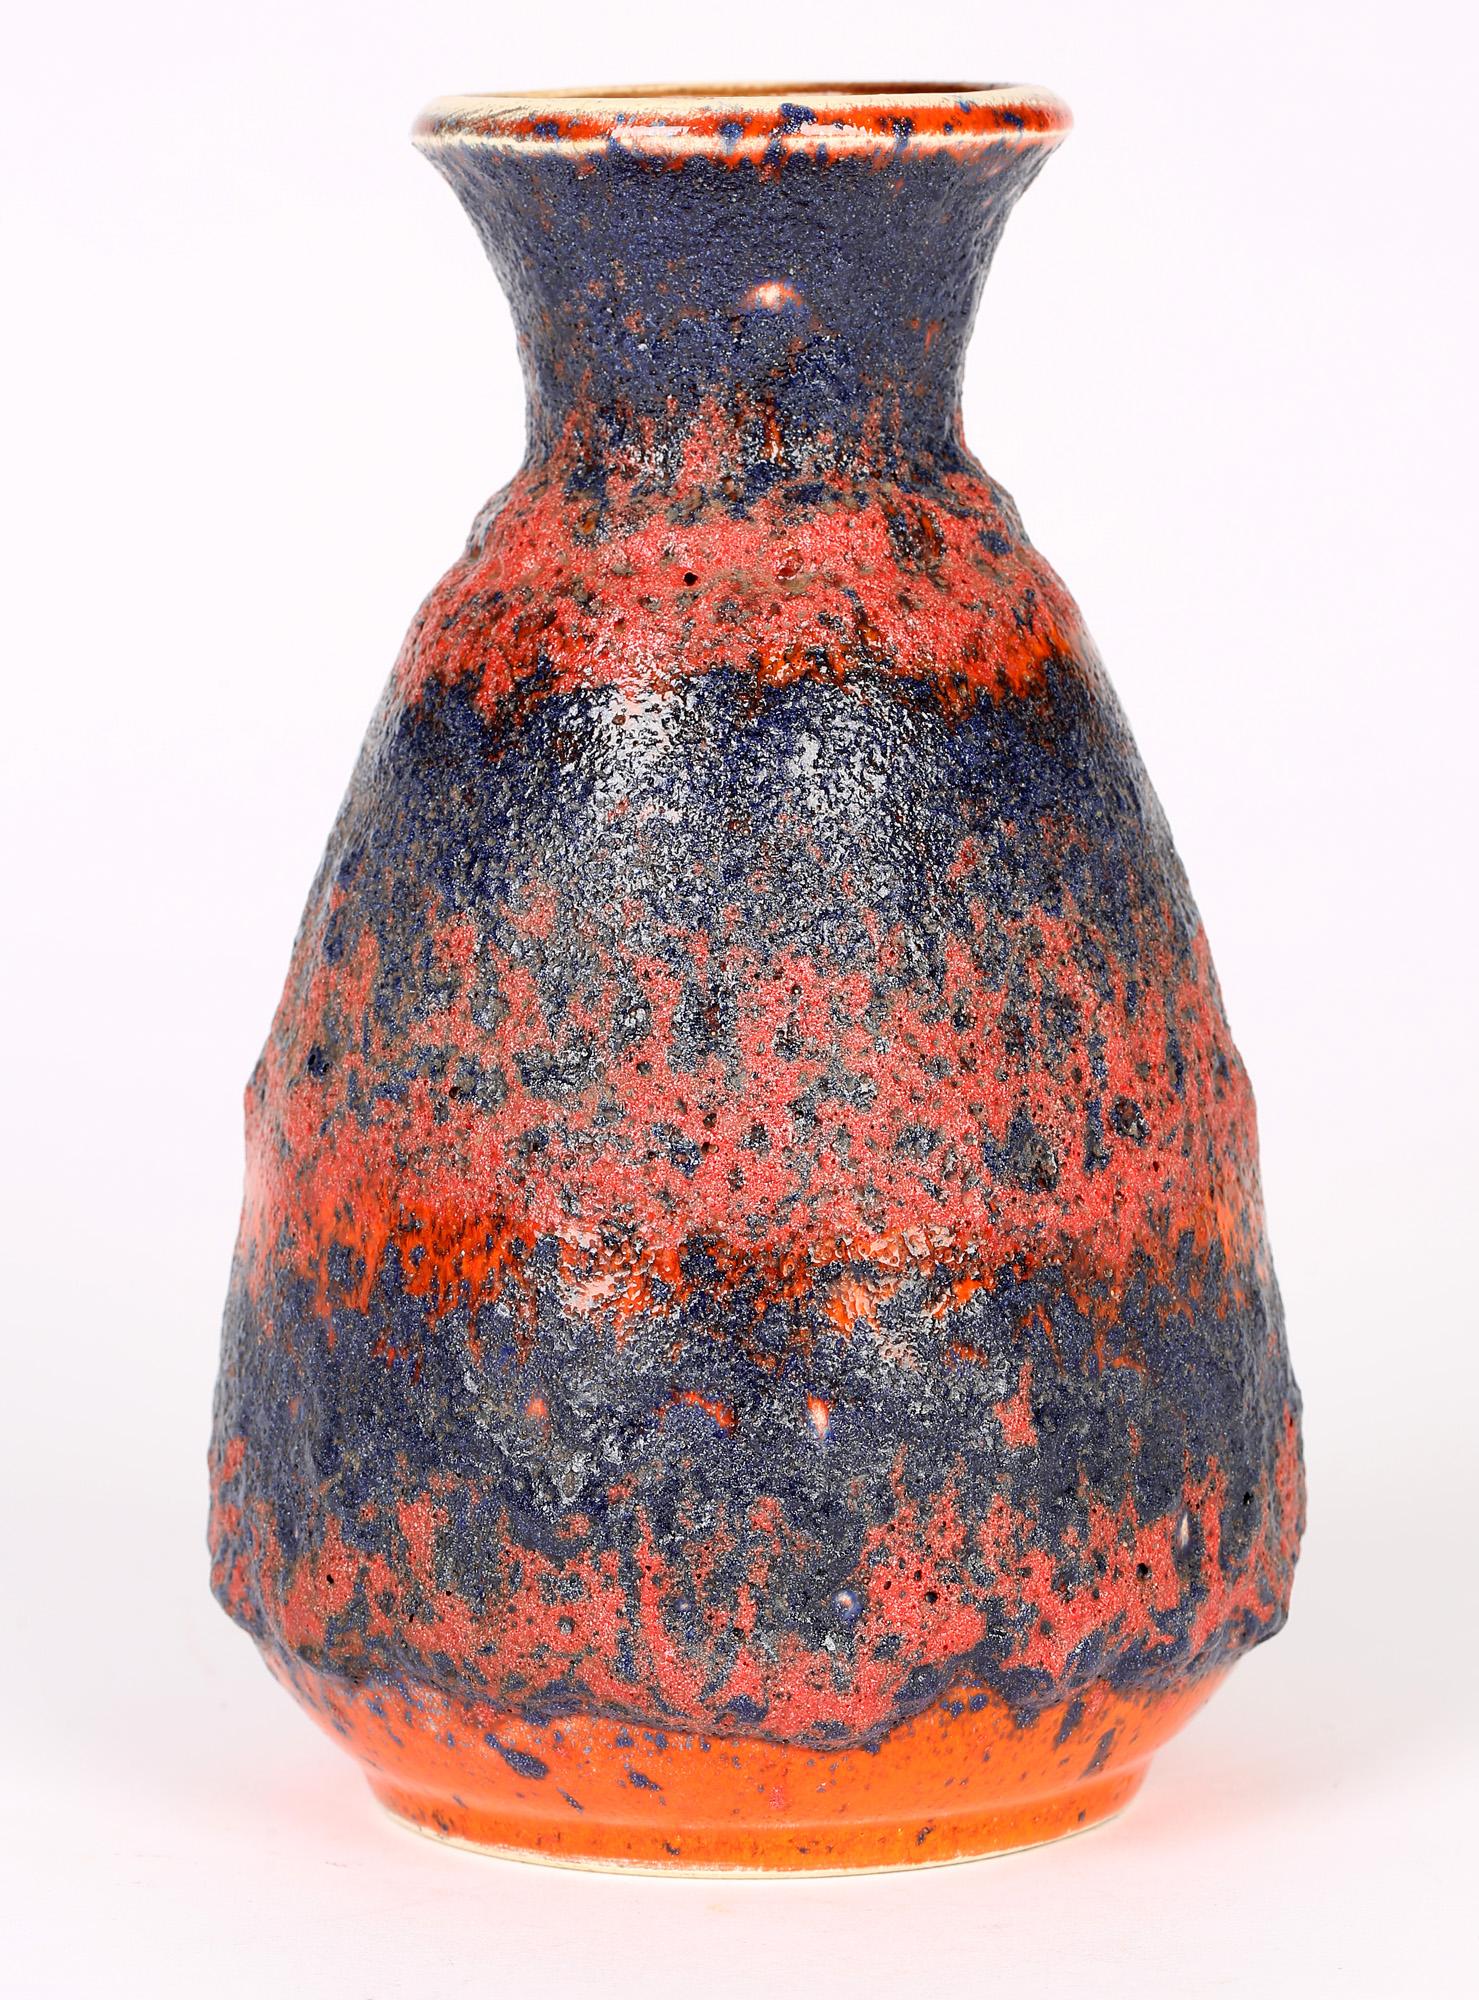 Hand-Crafted Bay Keramik West German Mid-Century Volcanic Fat Lava Glazed Art Pottery Vase